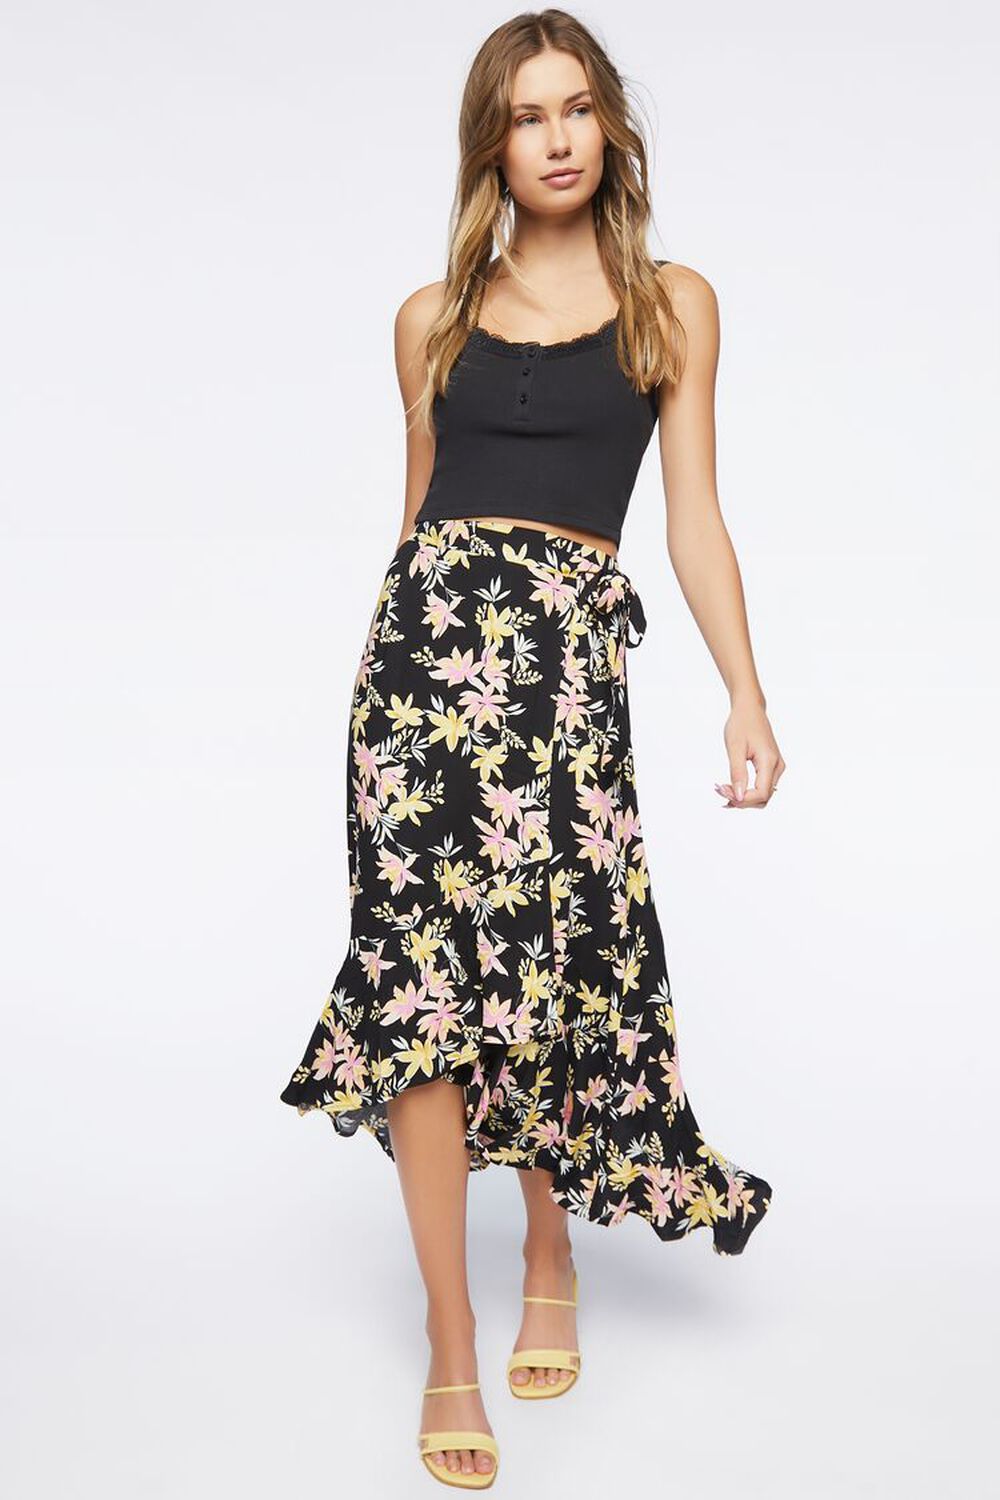 BLACK/MULTI Floral Print High-Low Skirt, image 1